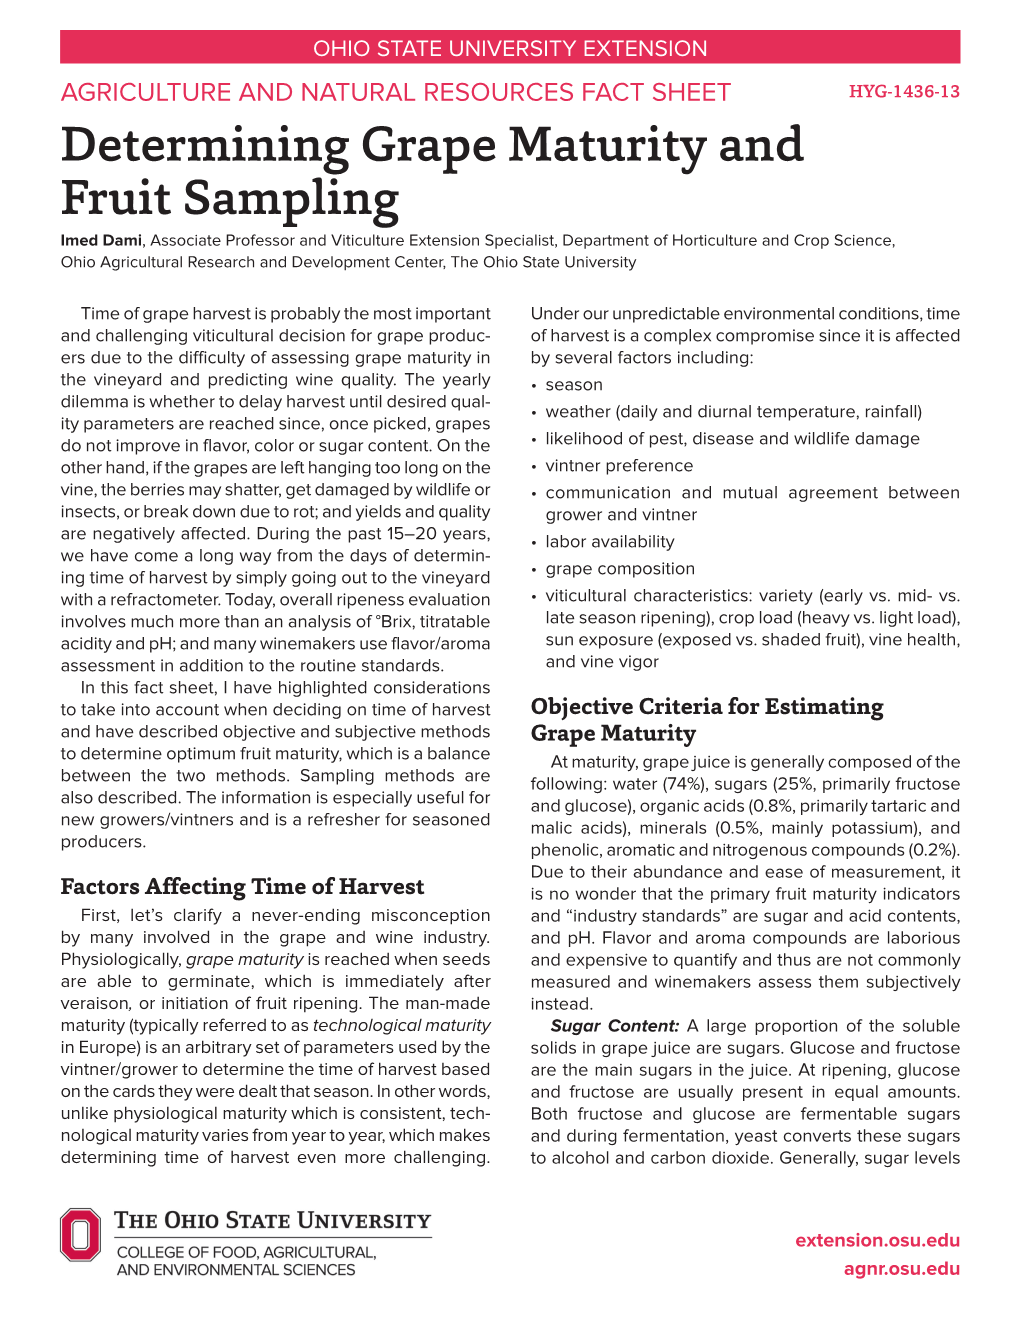 Determining Grape Maturity and Fruit Sampling